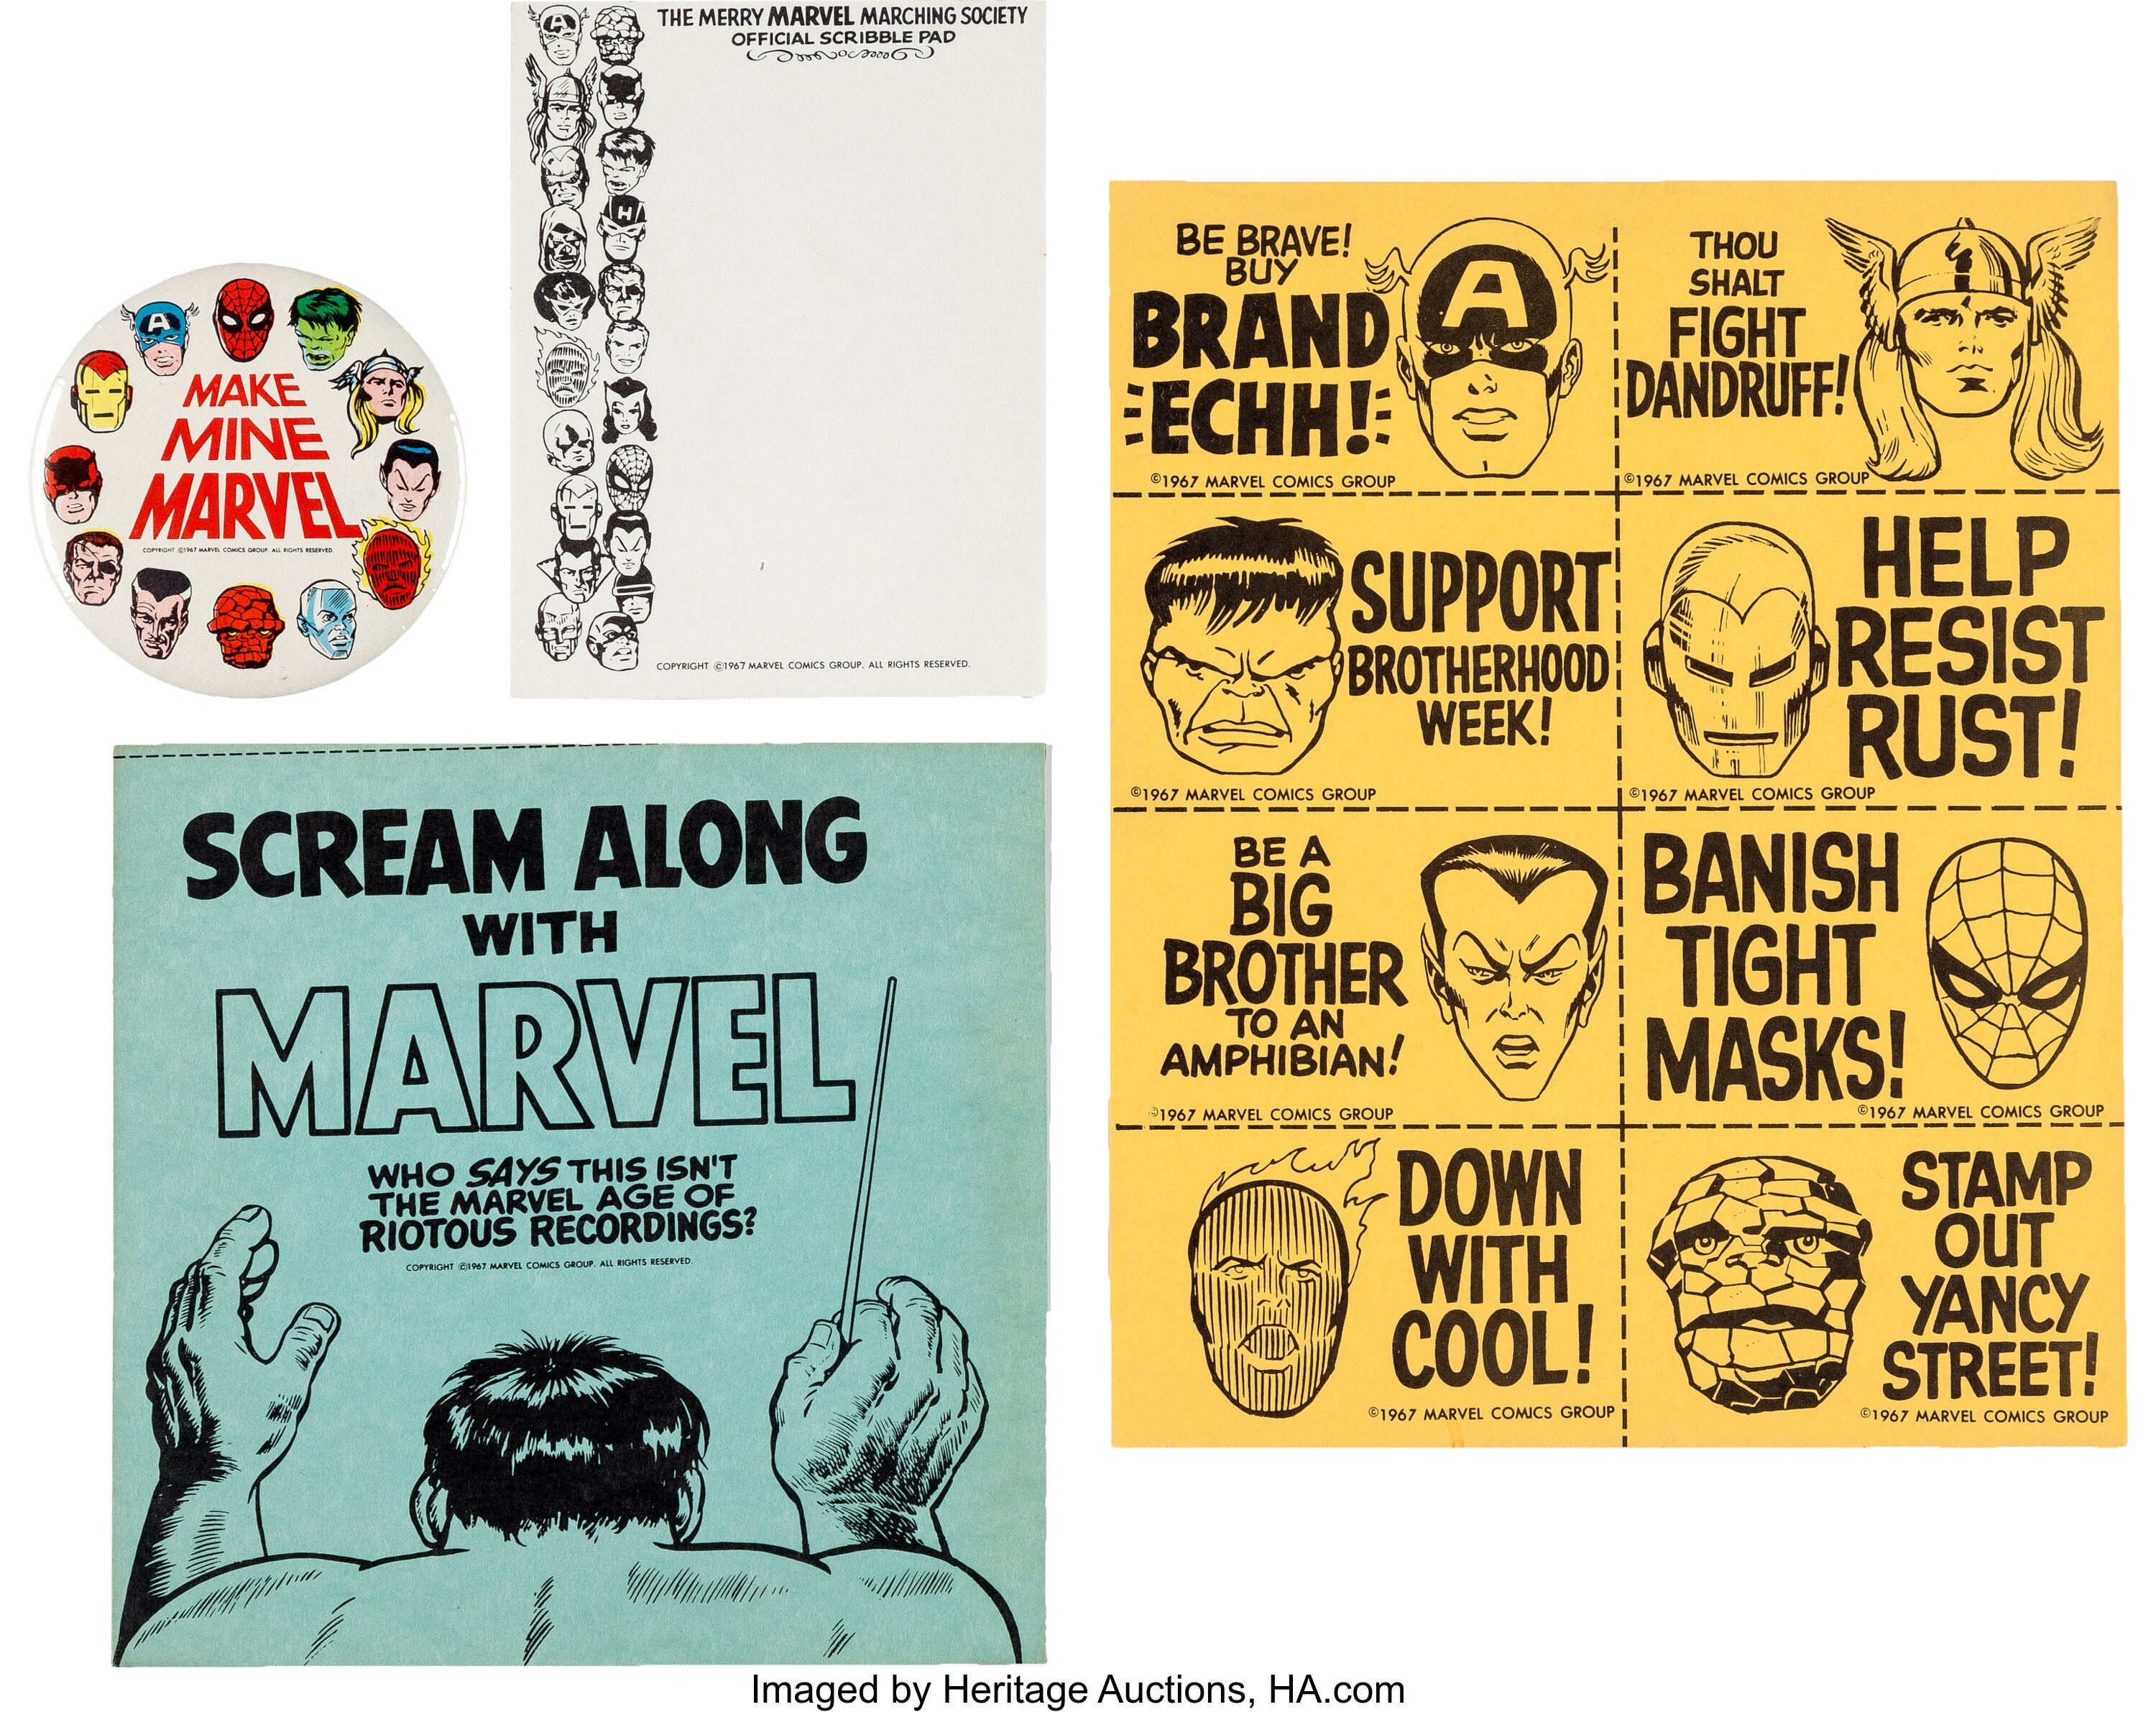 Merry Marvel Marching Society sticker sheet 2x3" fridge/locker magnet MMMS 60s 